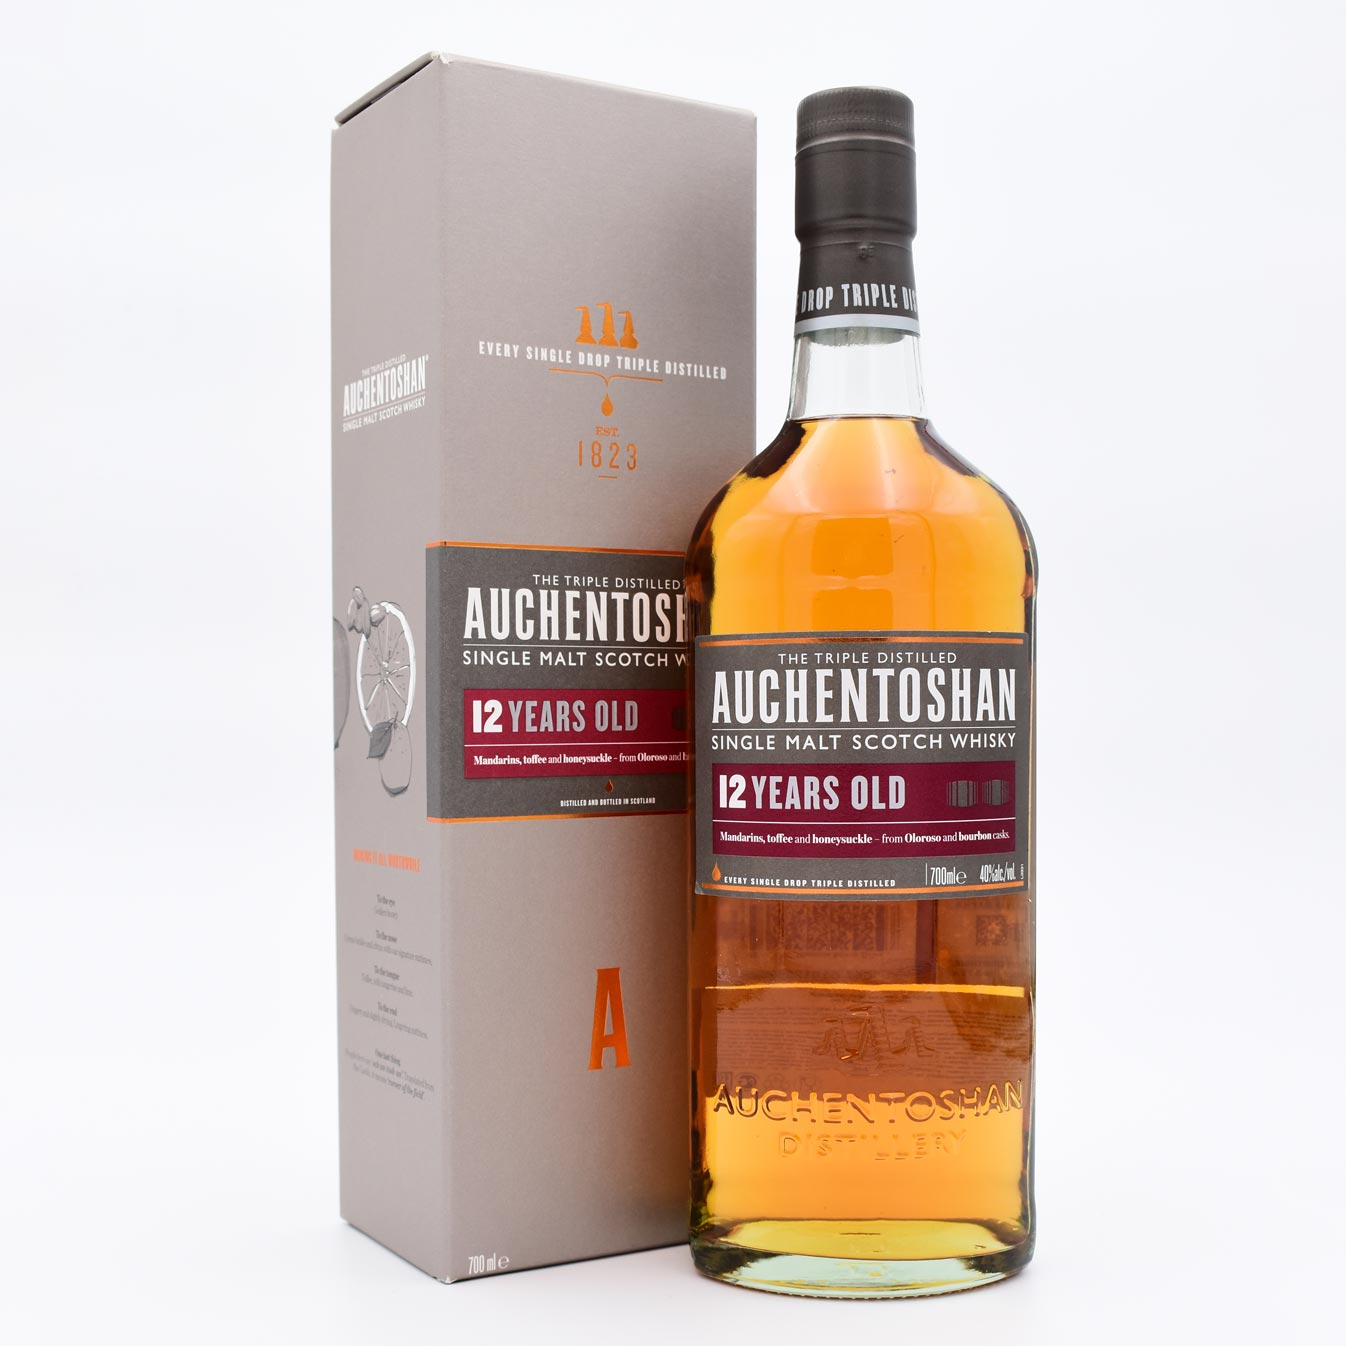 Auchentoshan цена 0.7. Auchentoshan Single Malt Scotch Whisky 0.7. Auchentoshan 12 years 0.7. Виски Auchentoshan American 12 years. Auchentoshan Single Malt 12 aged.